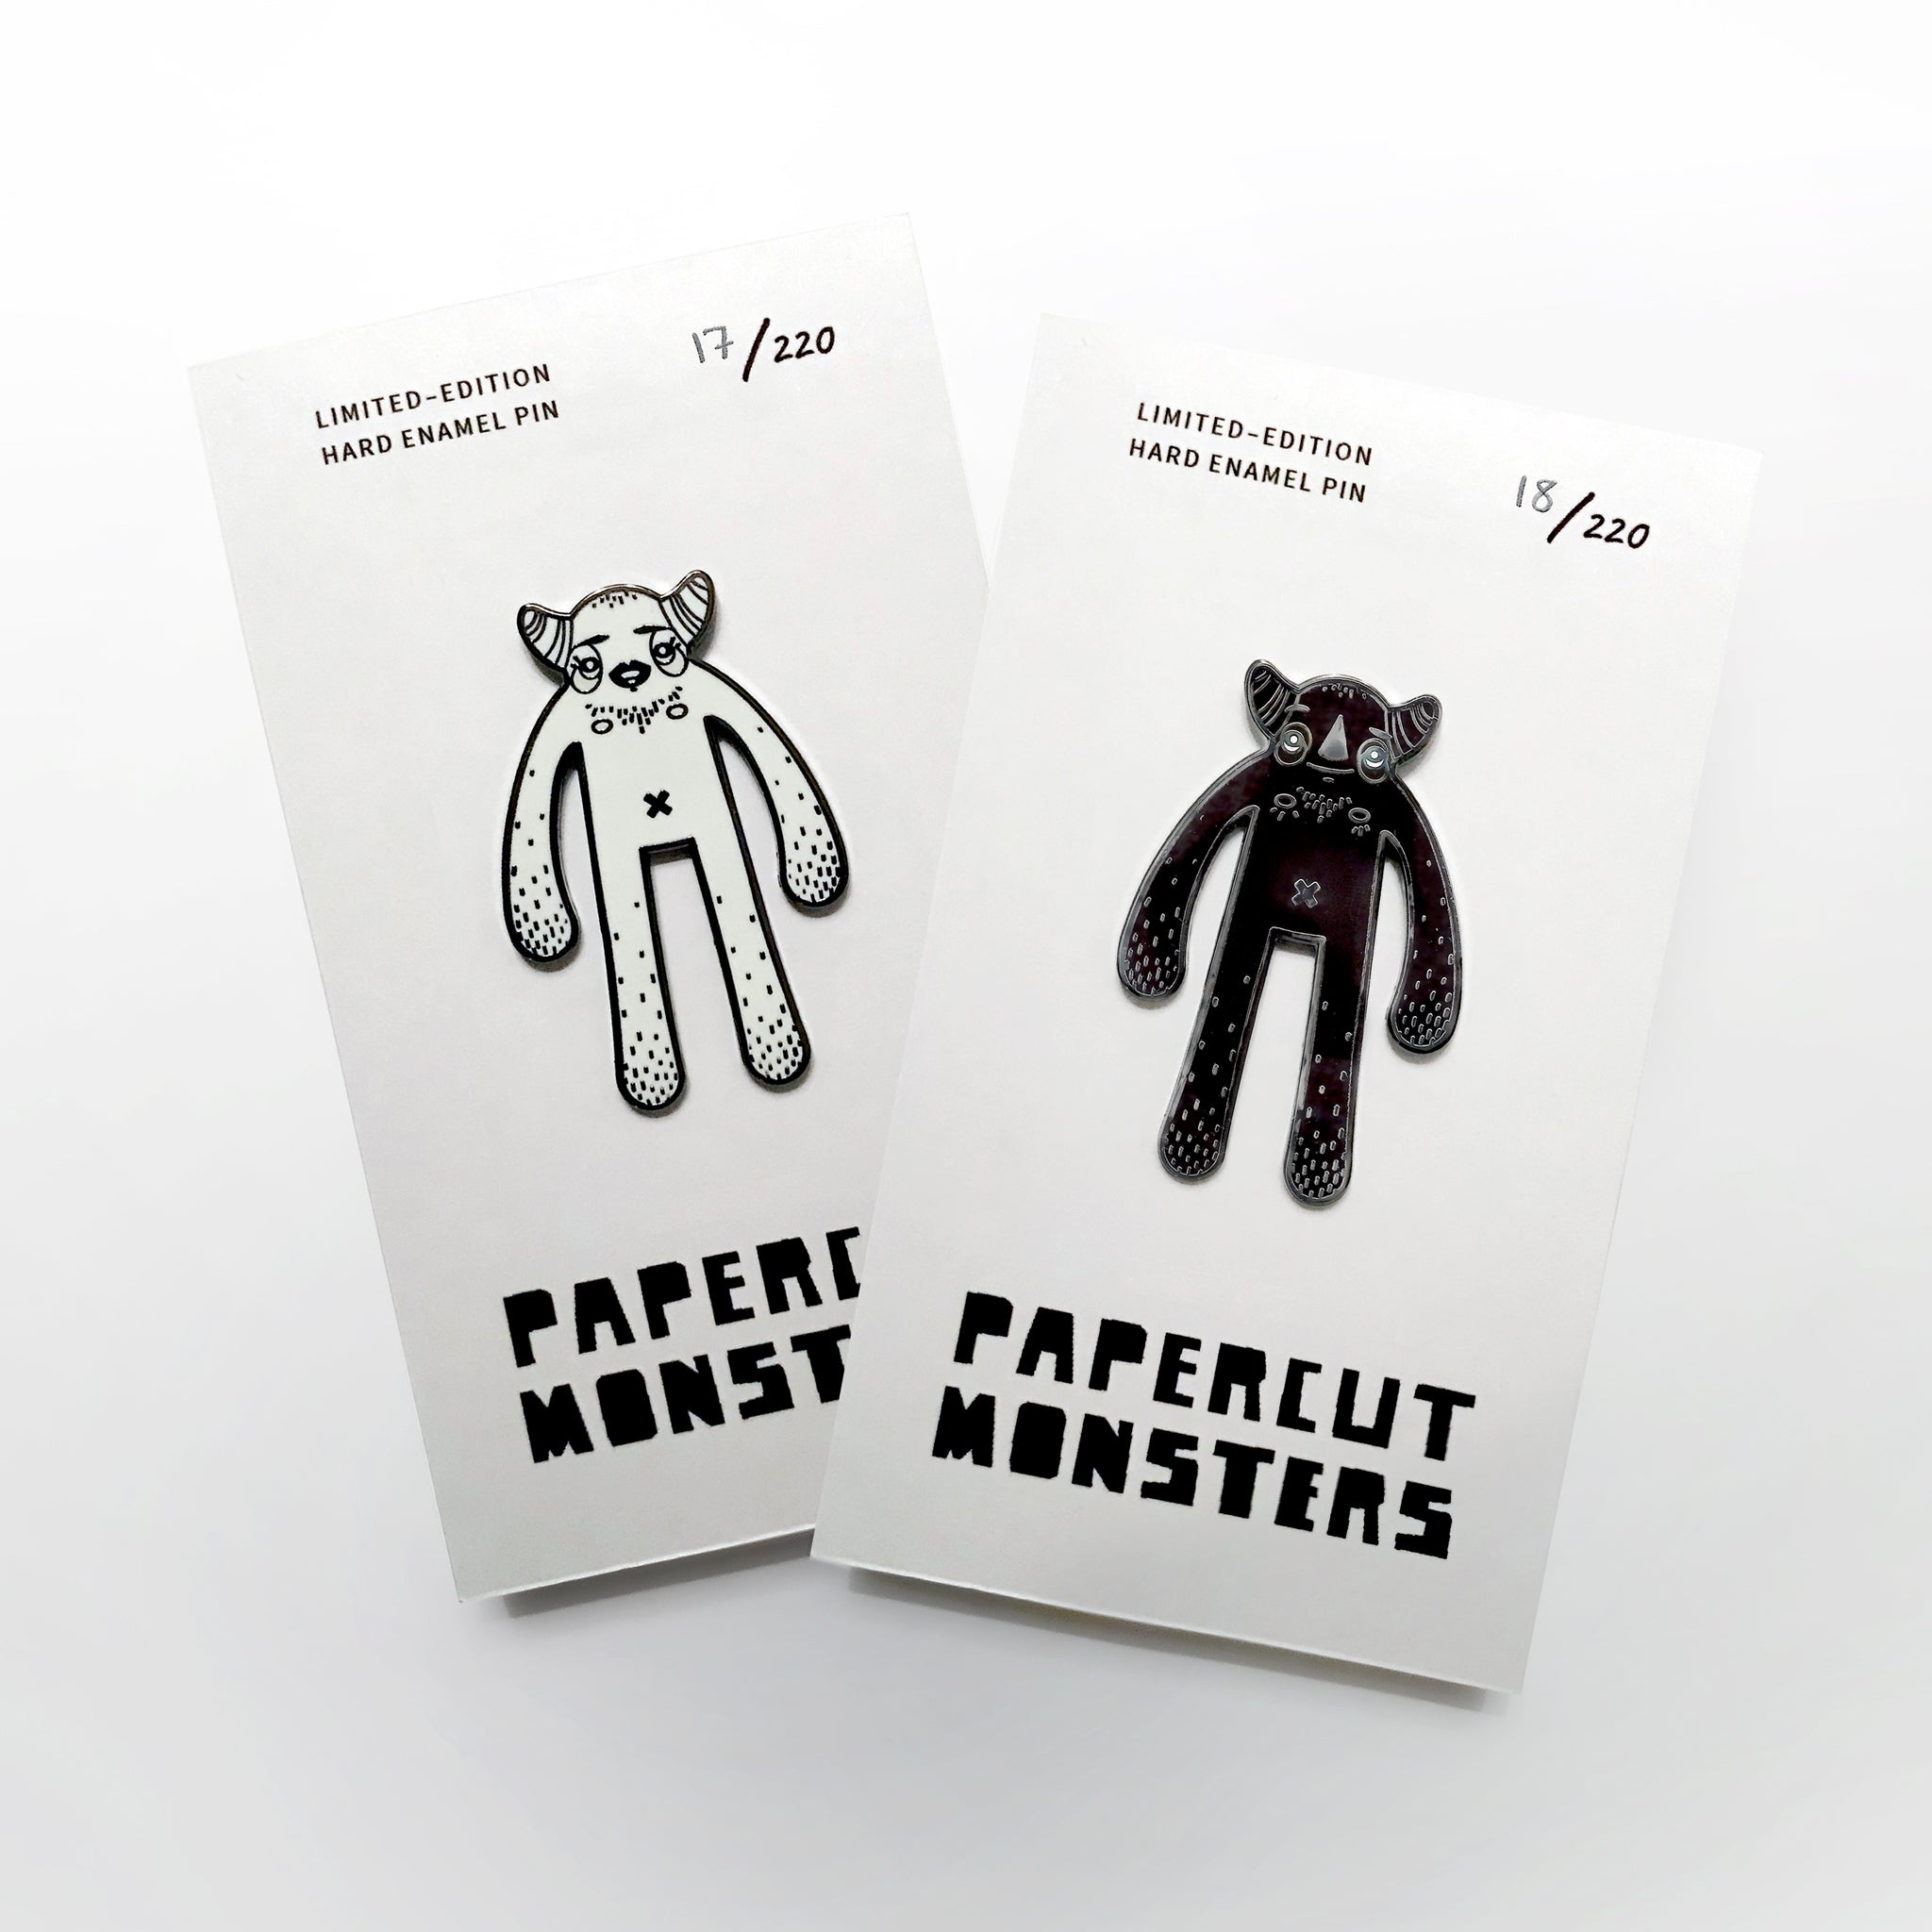 Hard Enamel Pin - Papercut Monsters - Handmade Stuffed Toy 